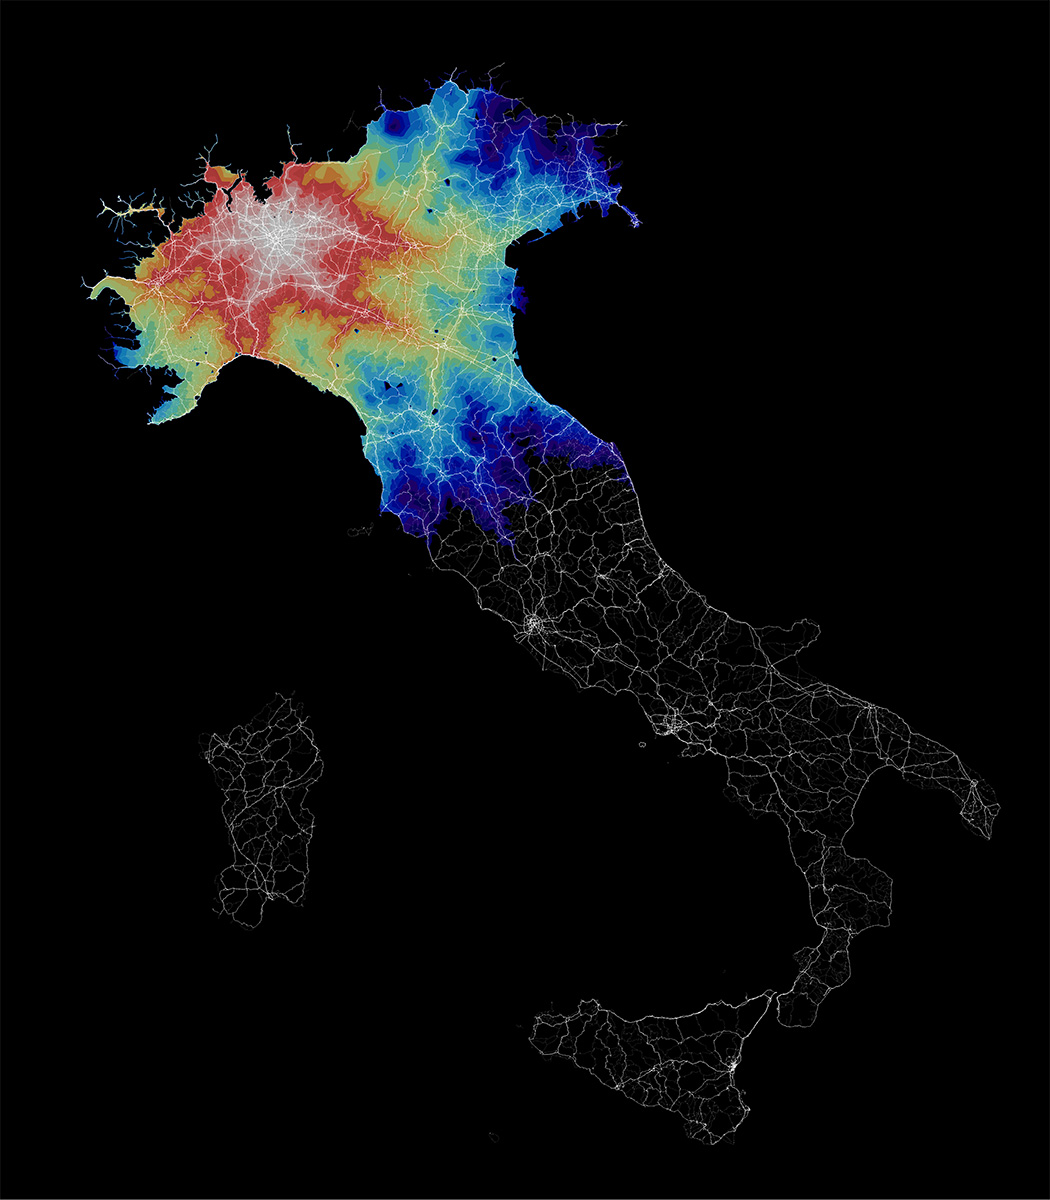 Milan Area: road network 2018-2050